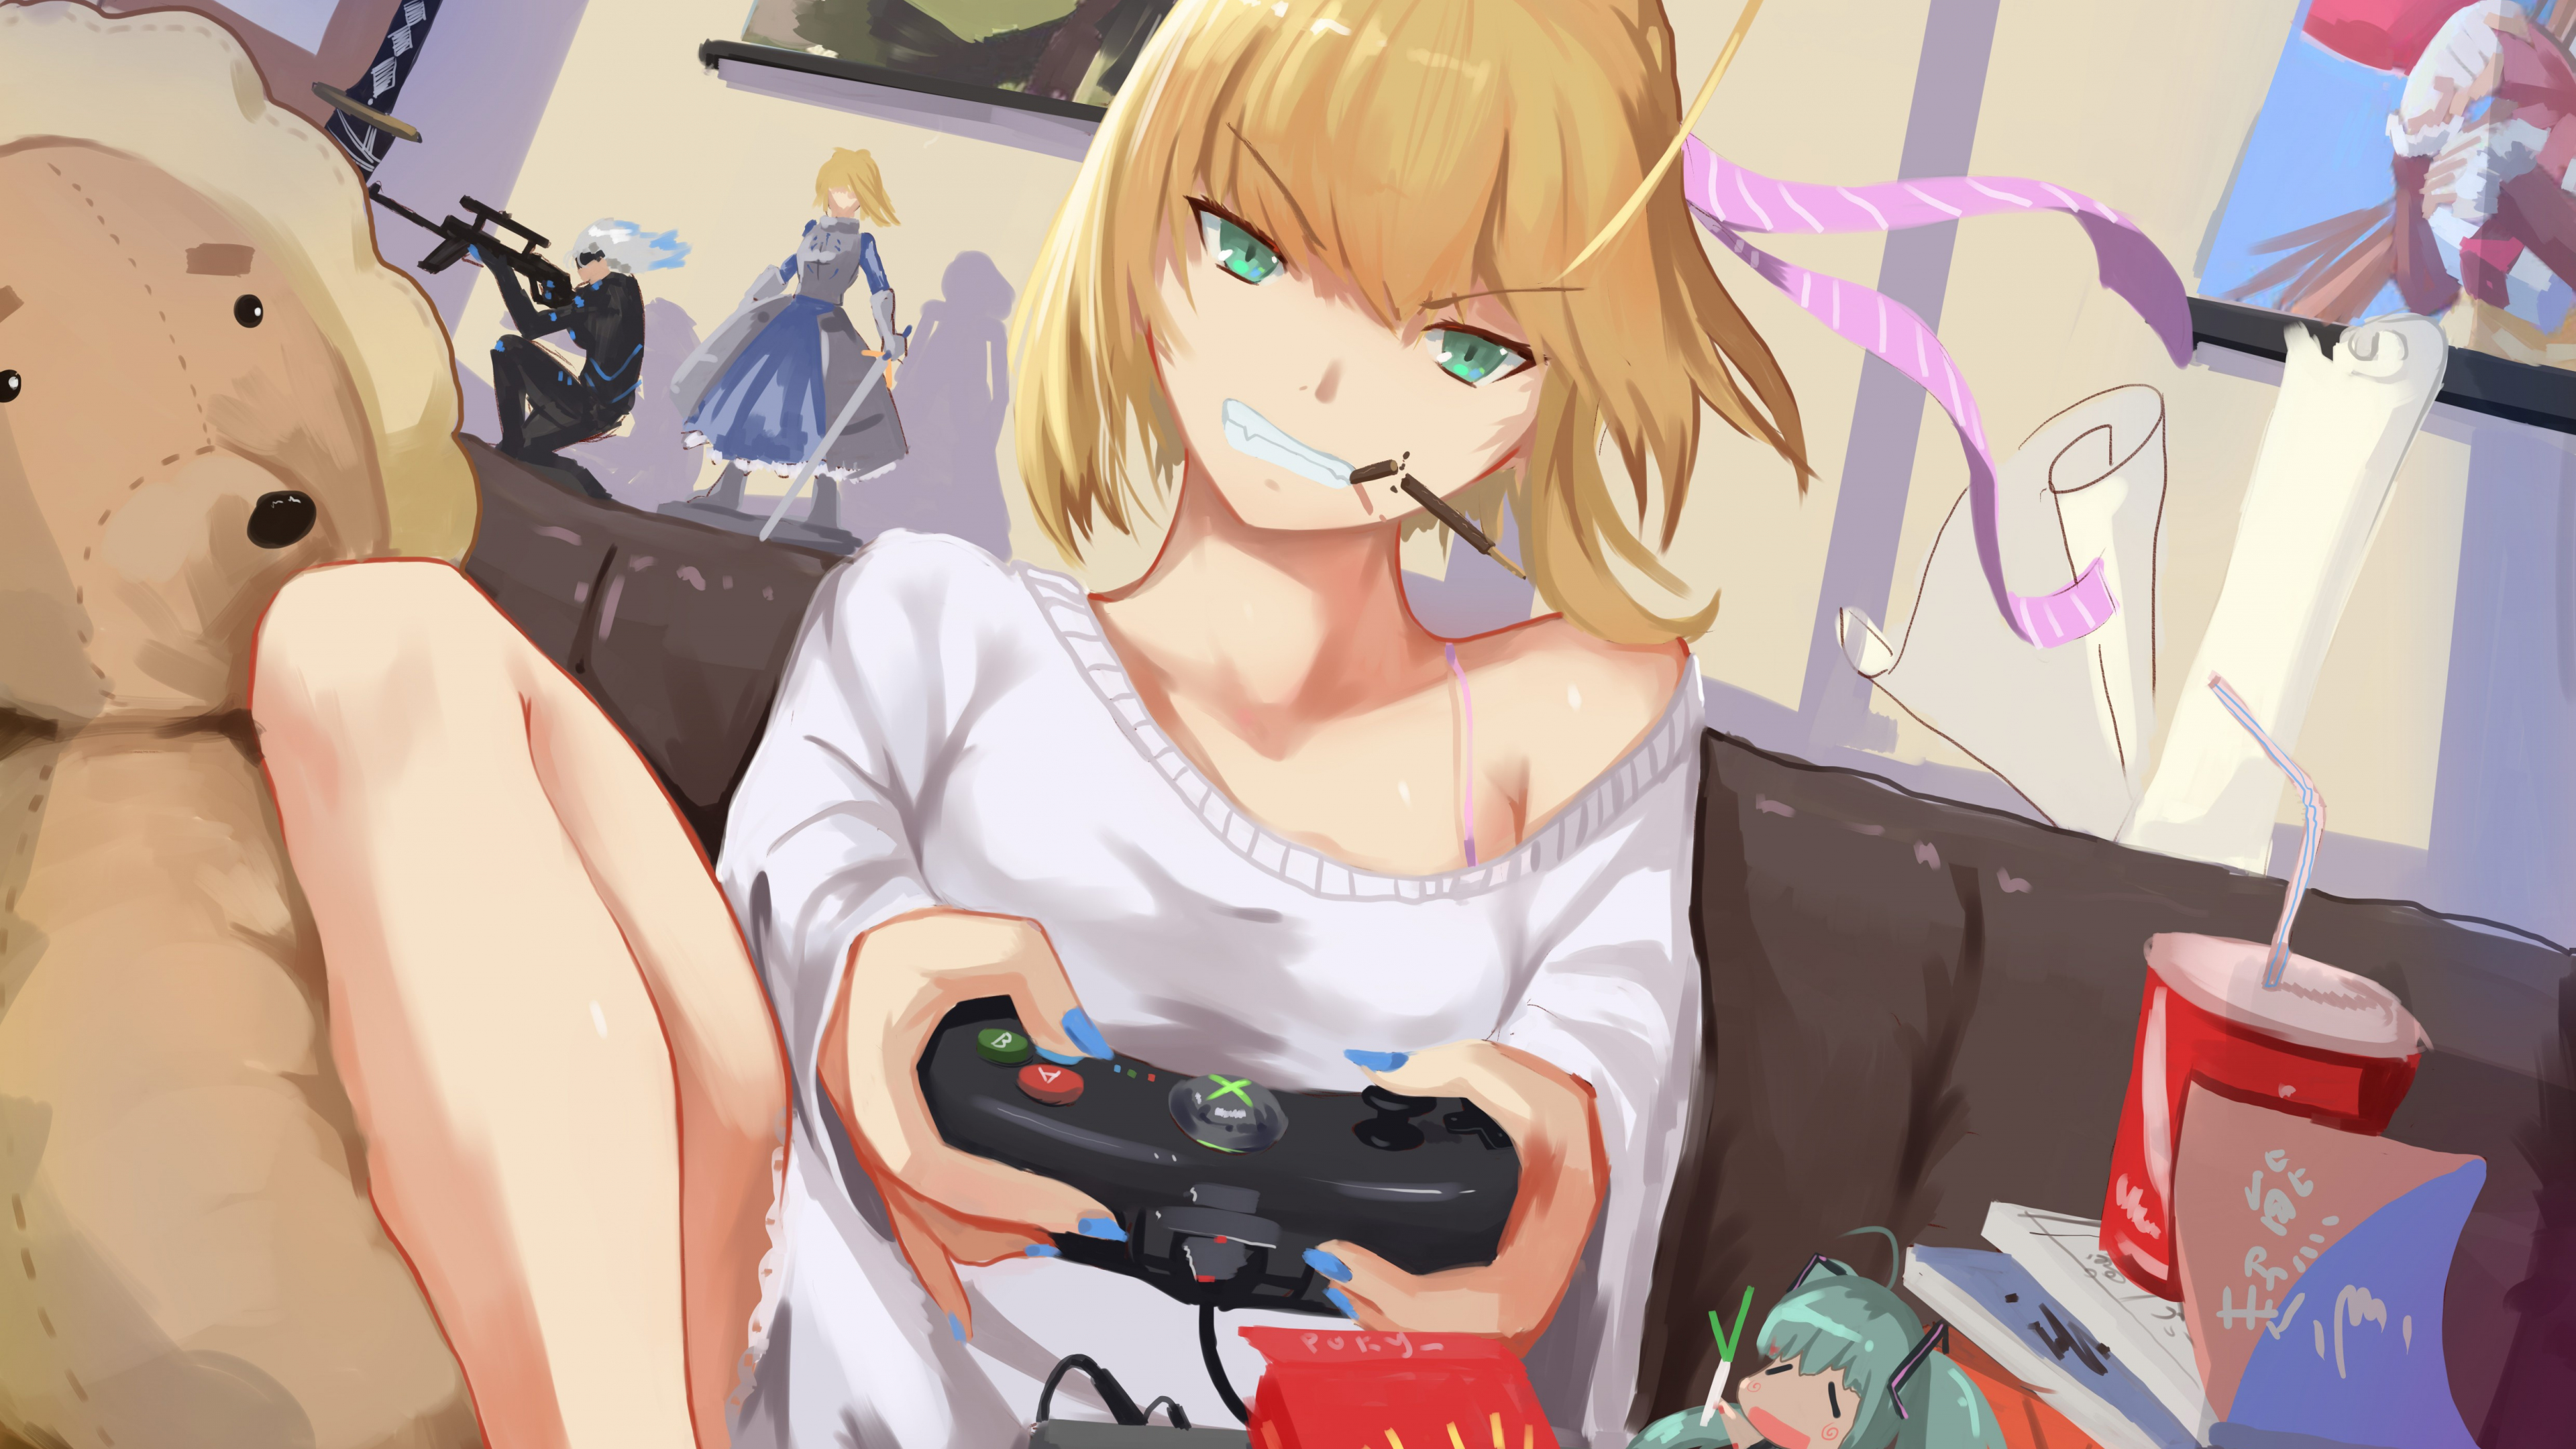 Download 3840x2160 Wallpaper Saber Lily Playing Game Blonde Anime Girl